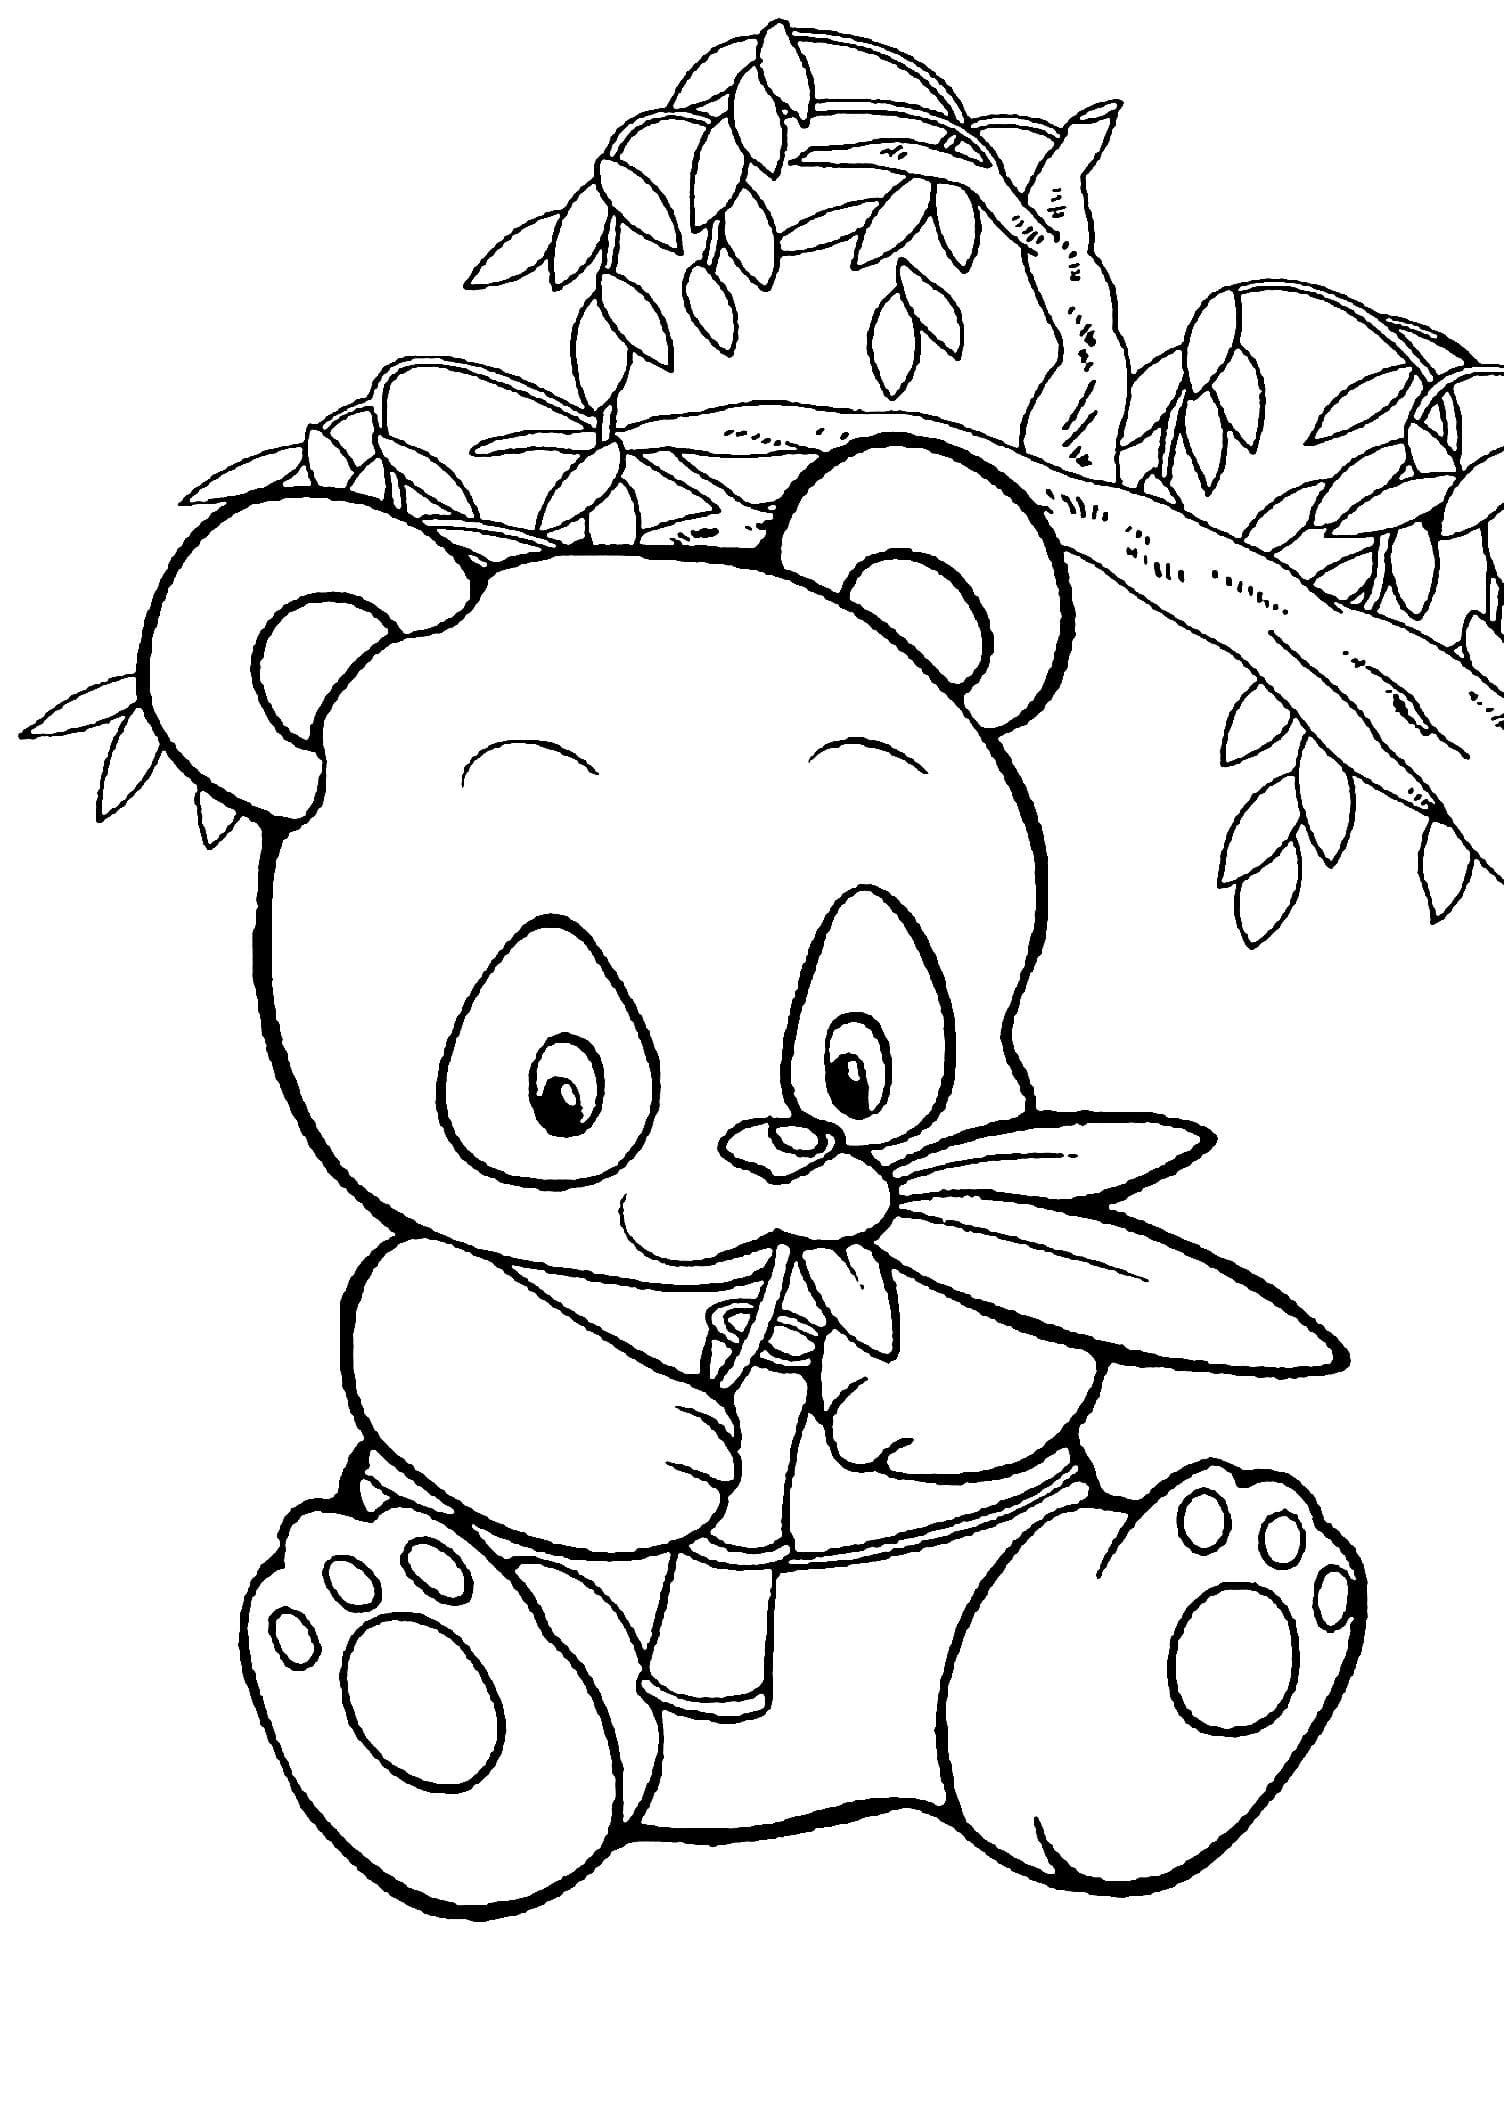 Funny Pandas Image Coloring Page